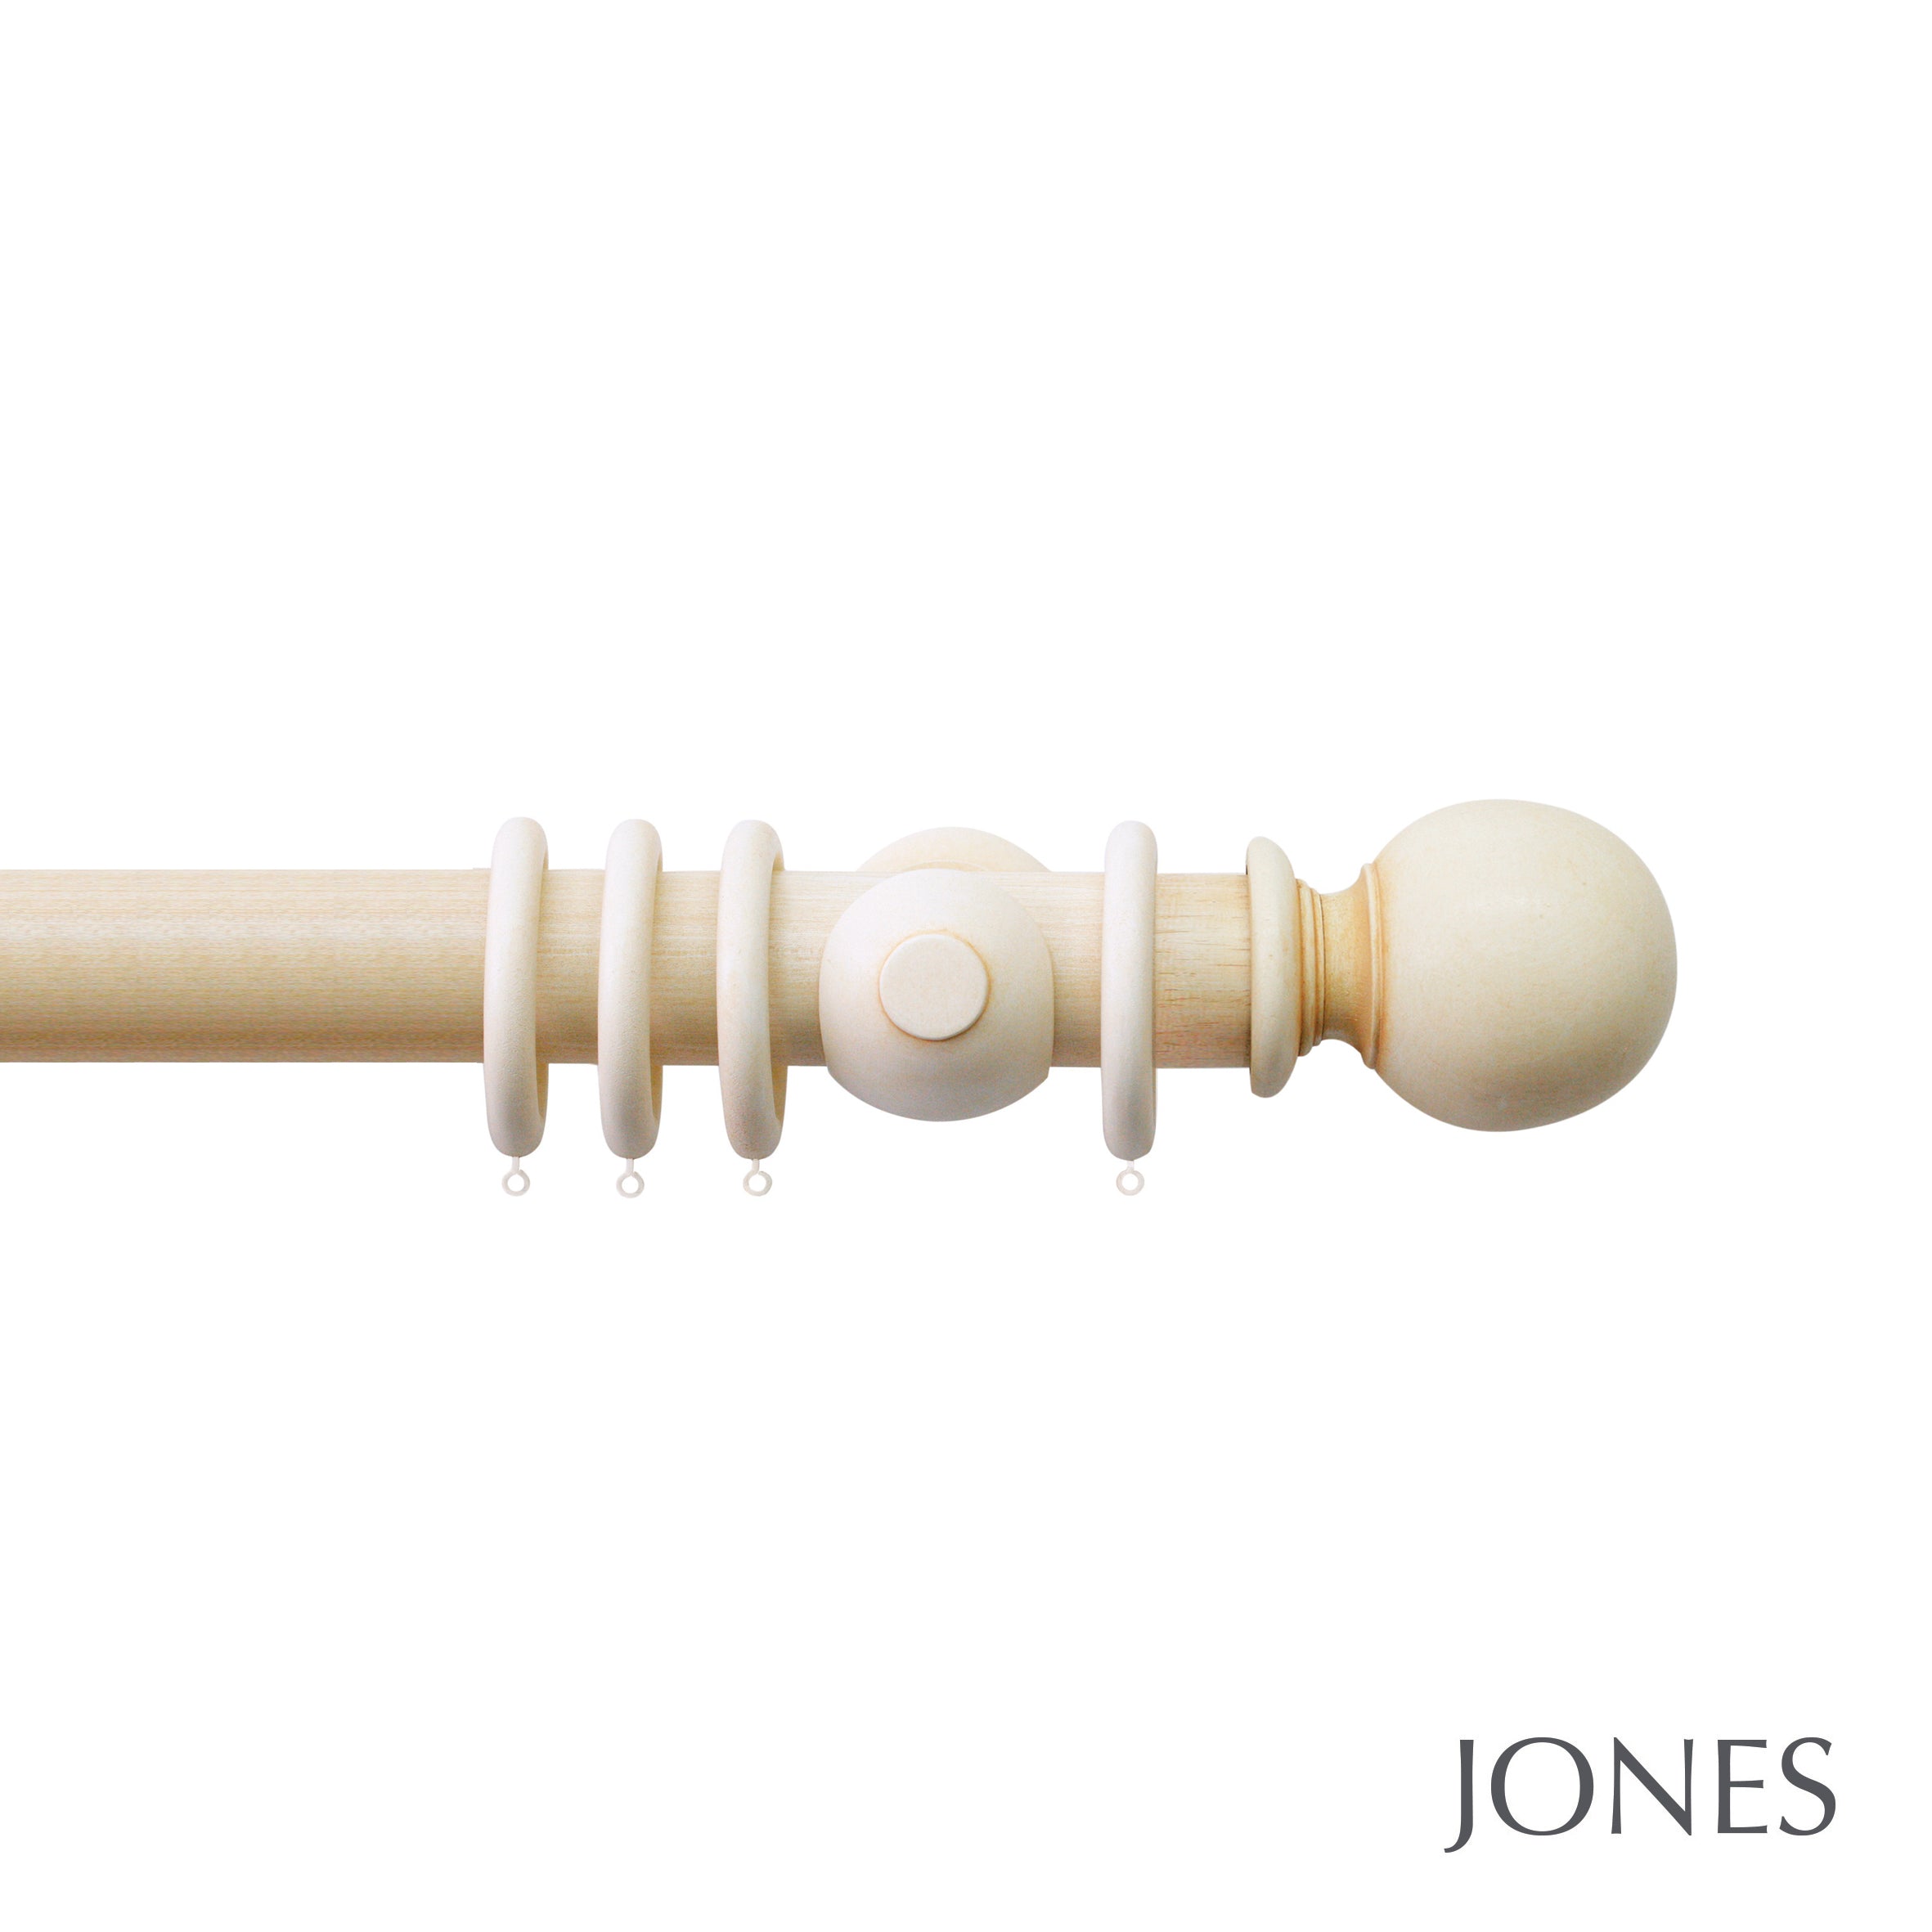 Jones Interiors Grande Ball Finial Curtain Pole Set in ivory